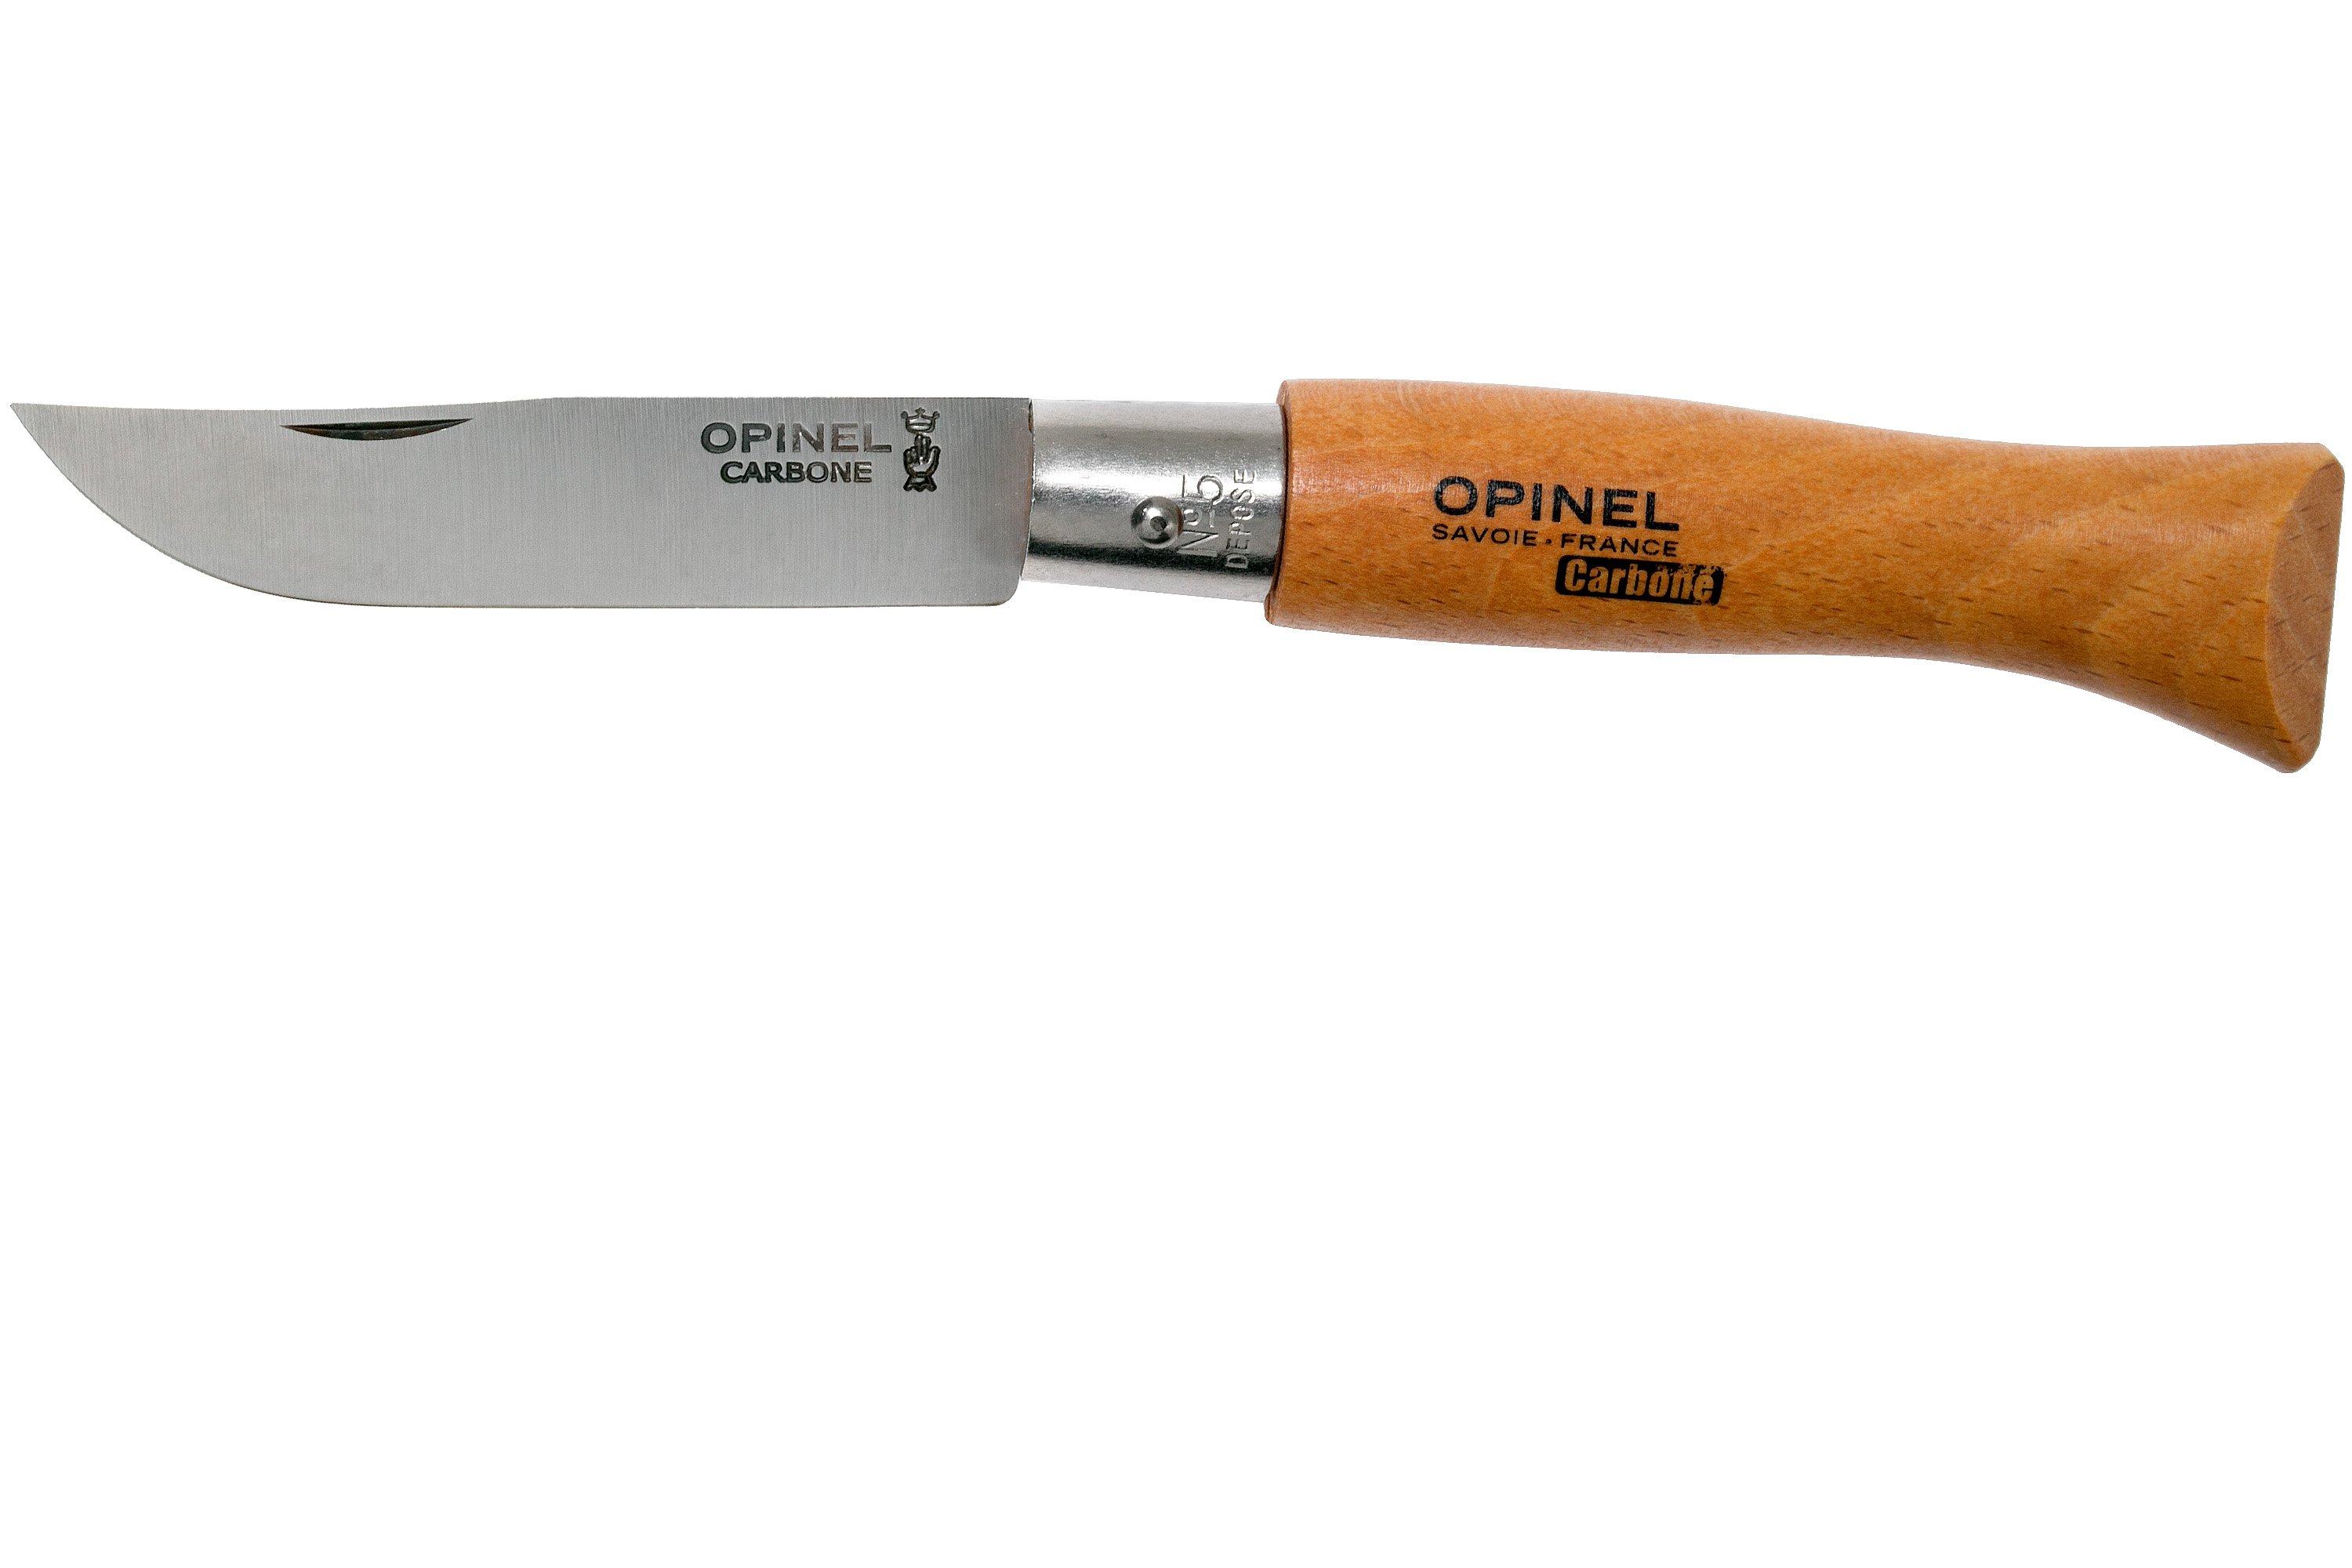 Malaise Instituut reservoir Opinel No. 05 pocket knife, carbon steel, blade length 6 cm |  Advantageously shopping at Knivesandtools.com